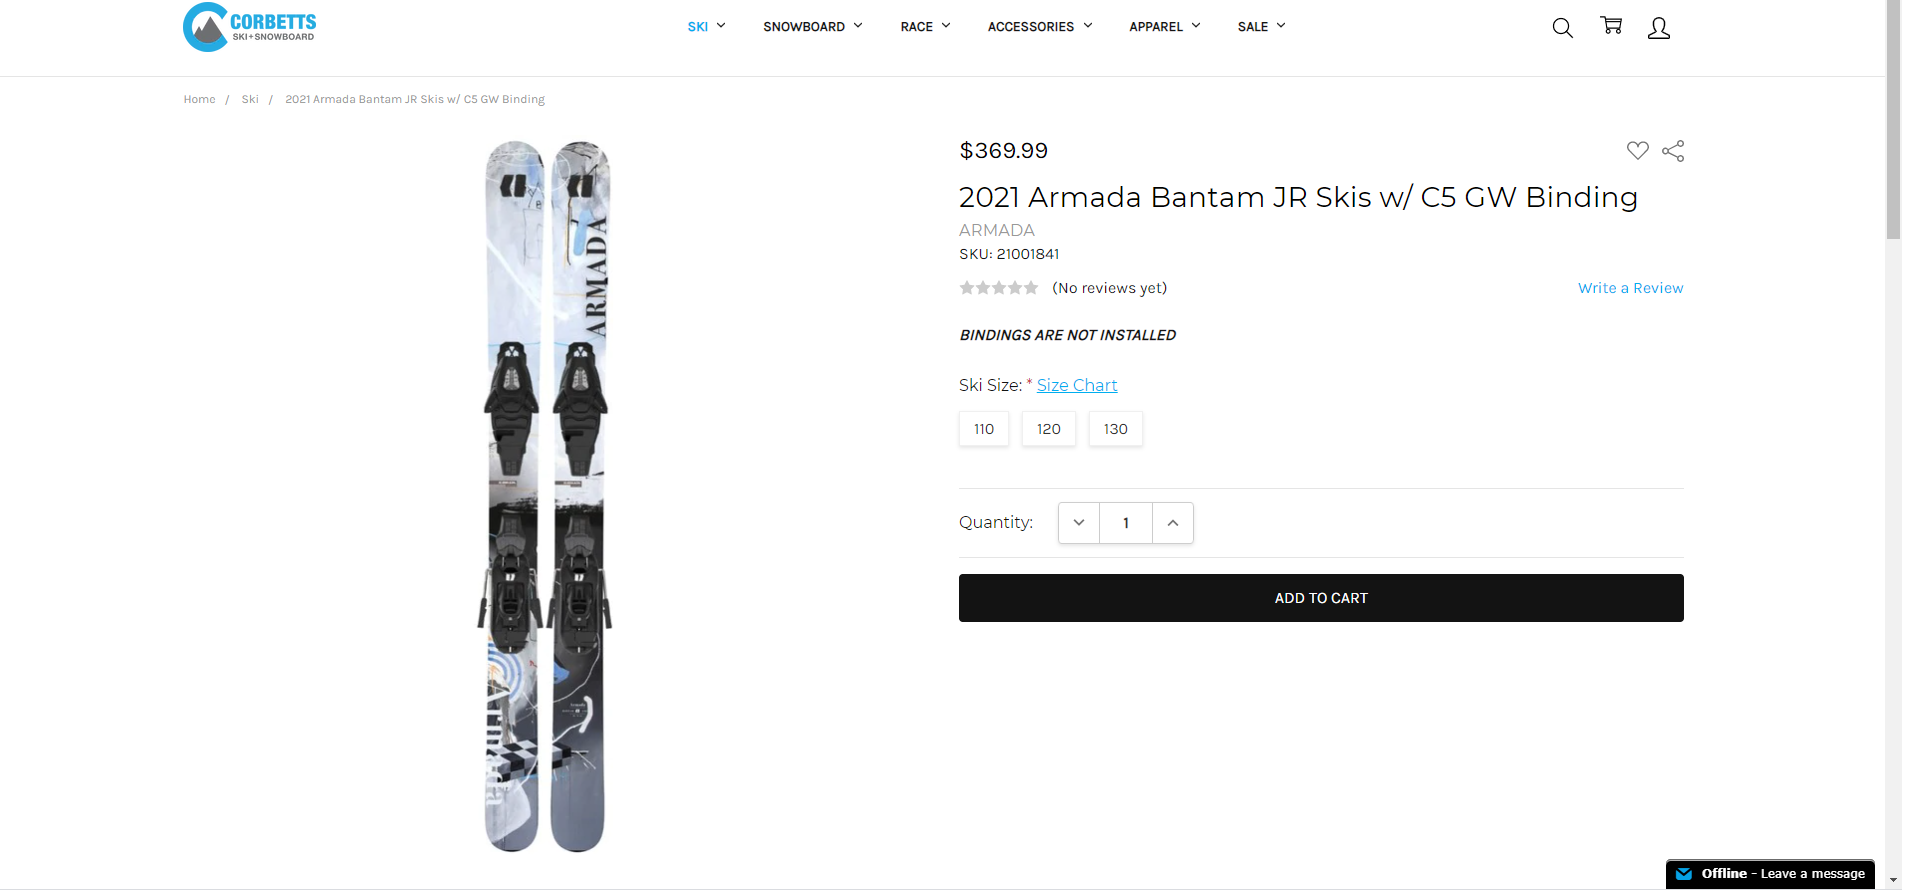 Best Skis 2021 - Armada Jr. C5